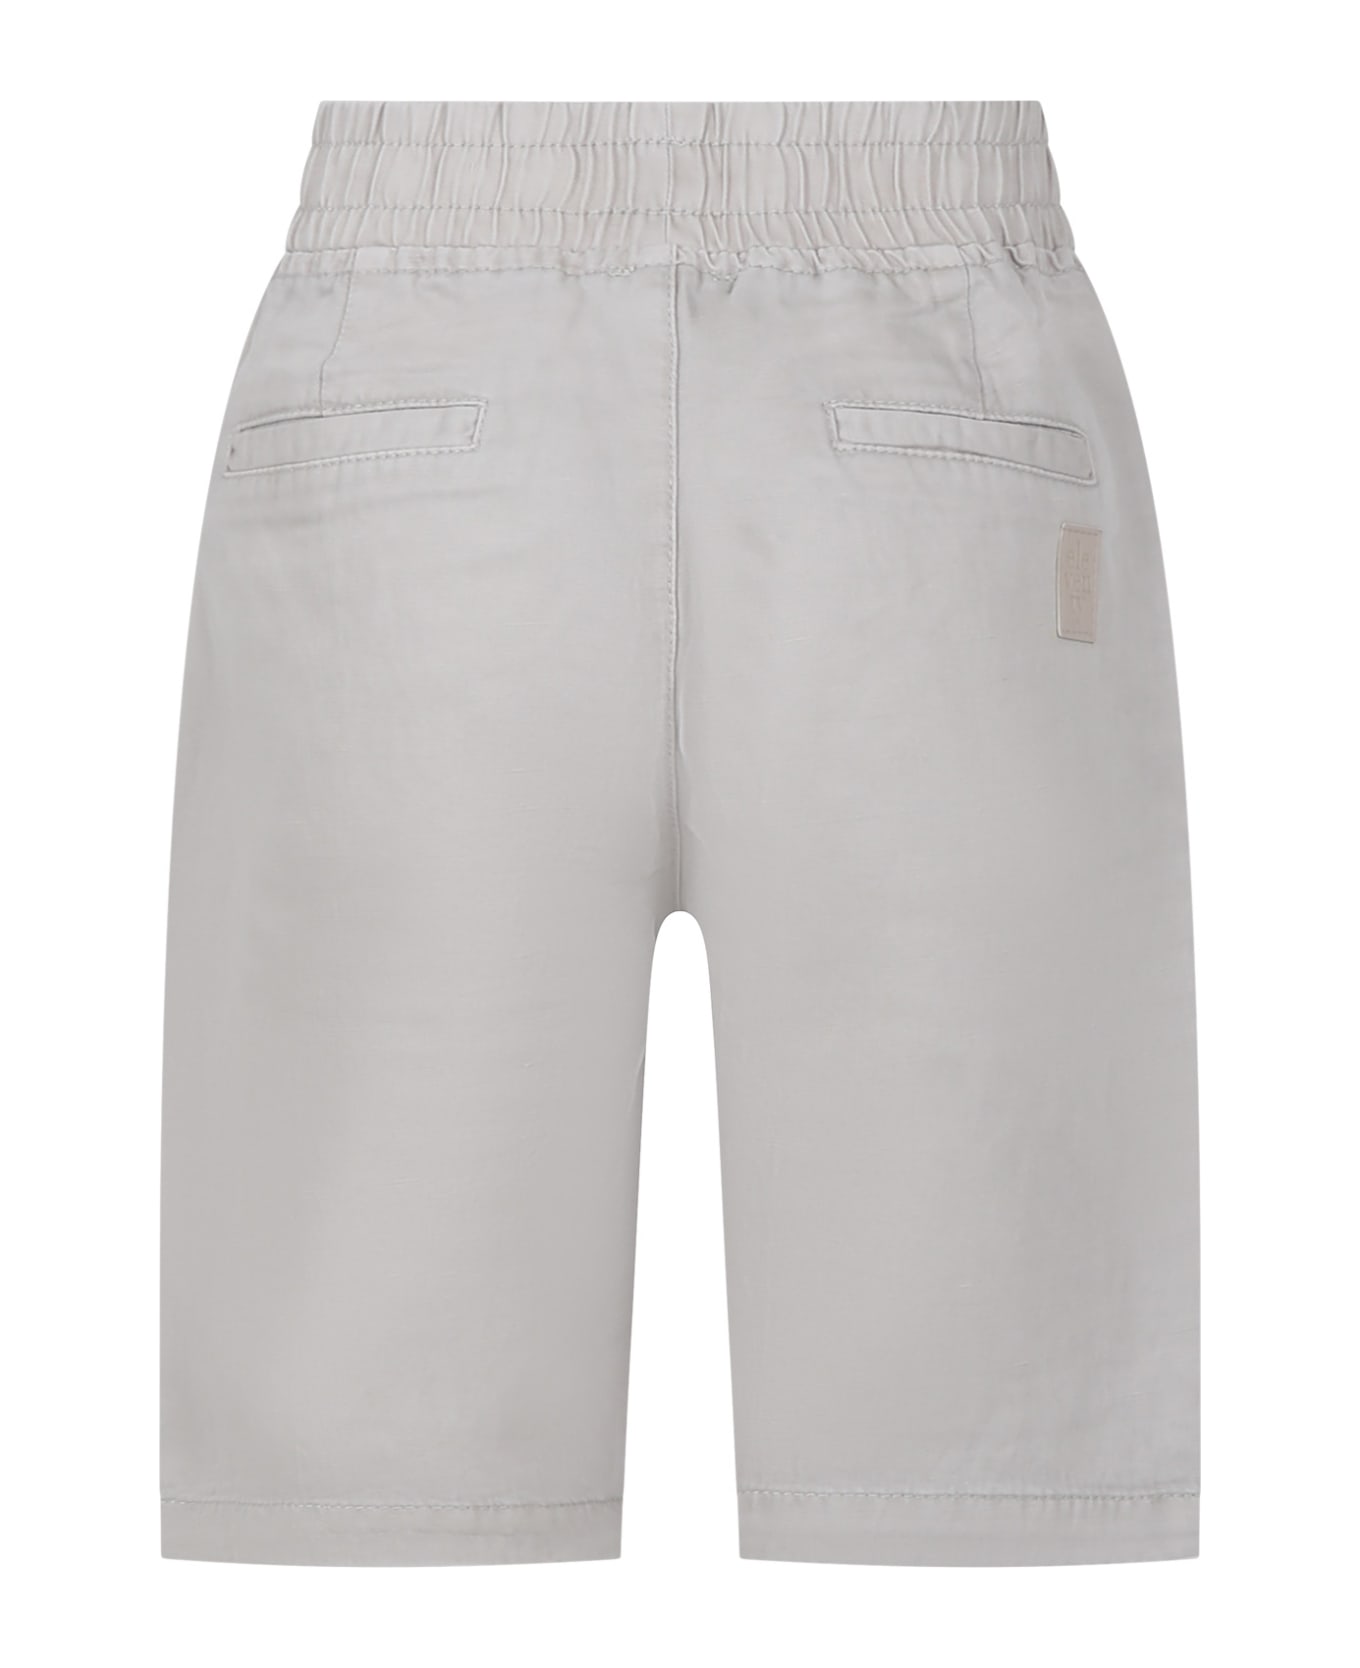 Eleventy Gray Casual Shorts For Boy - Grey